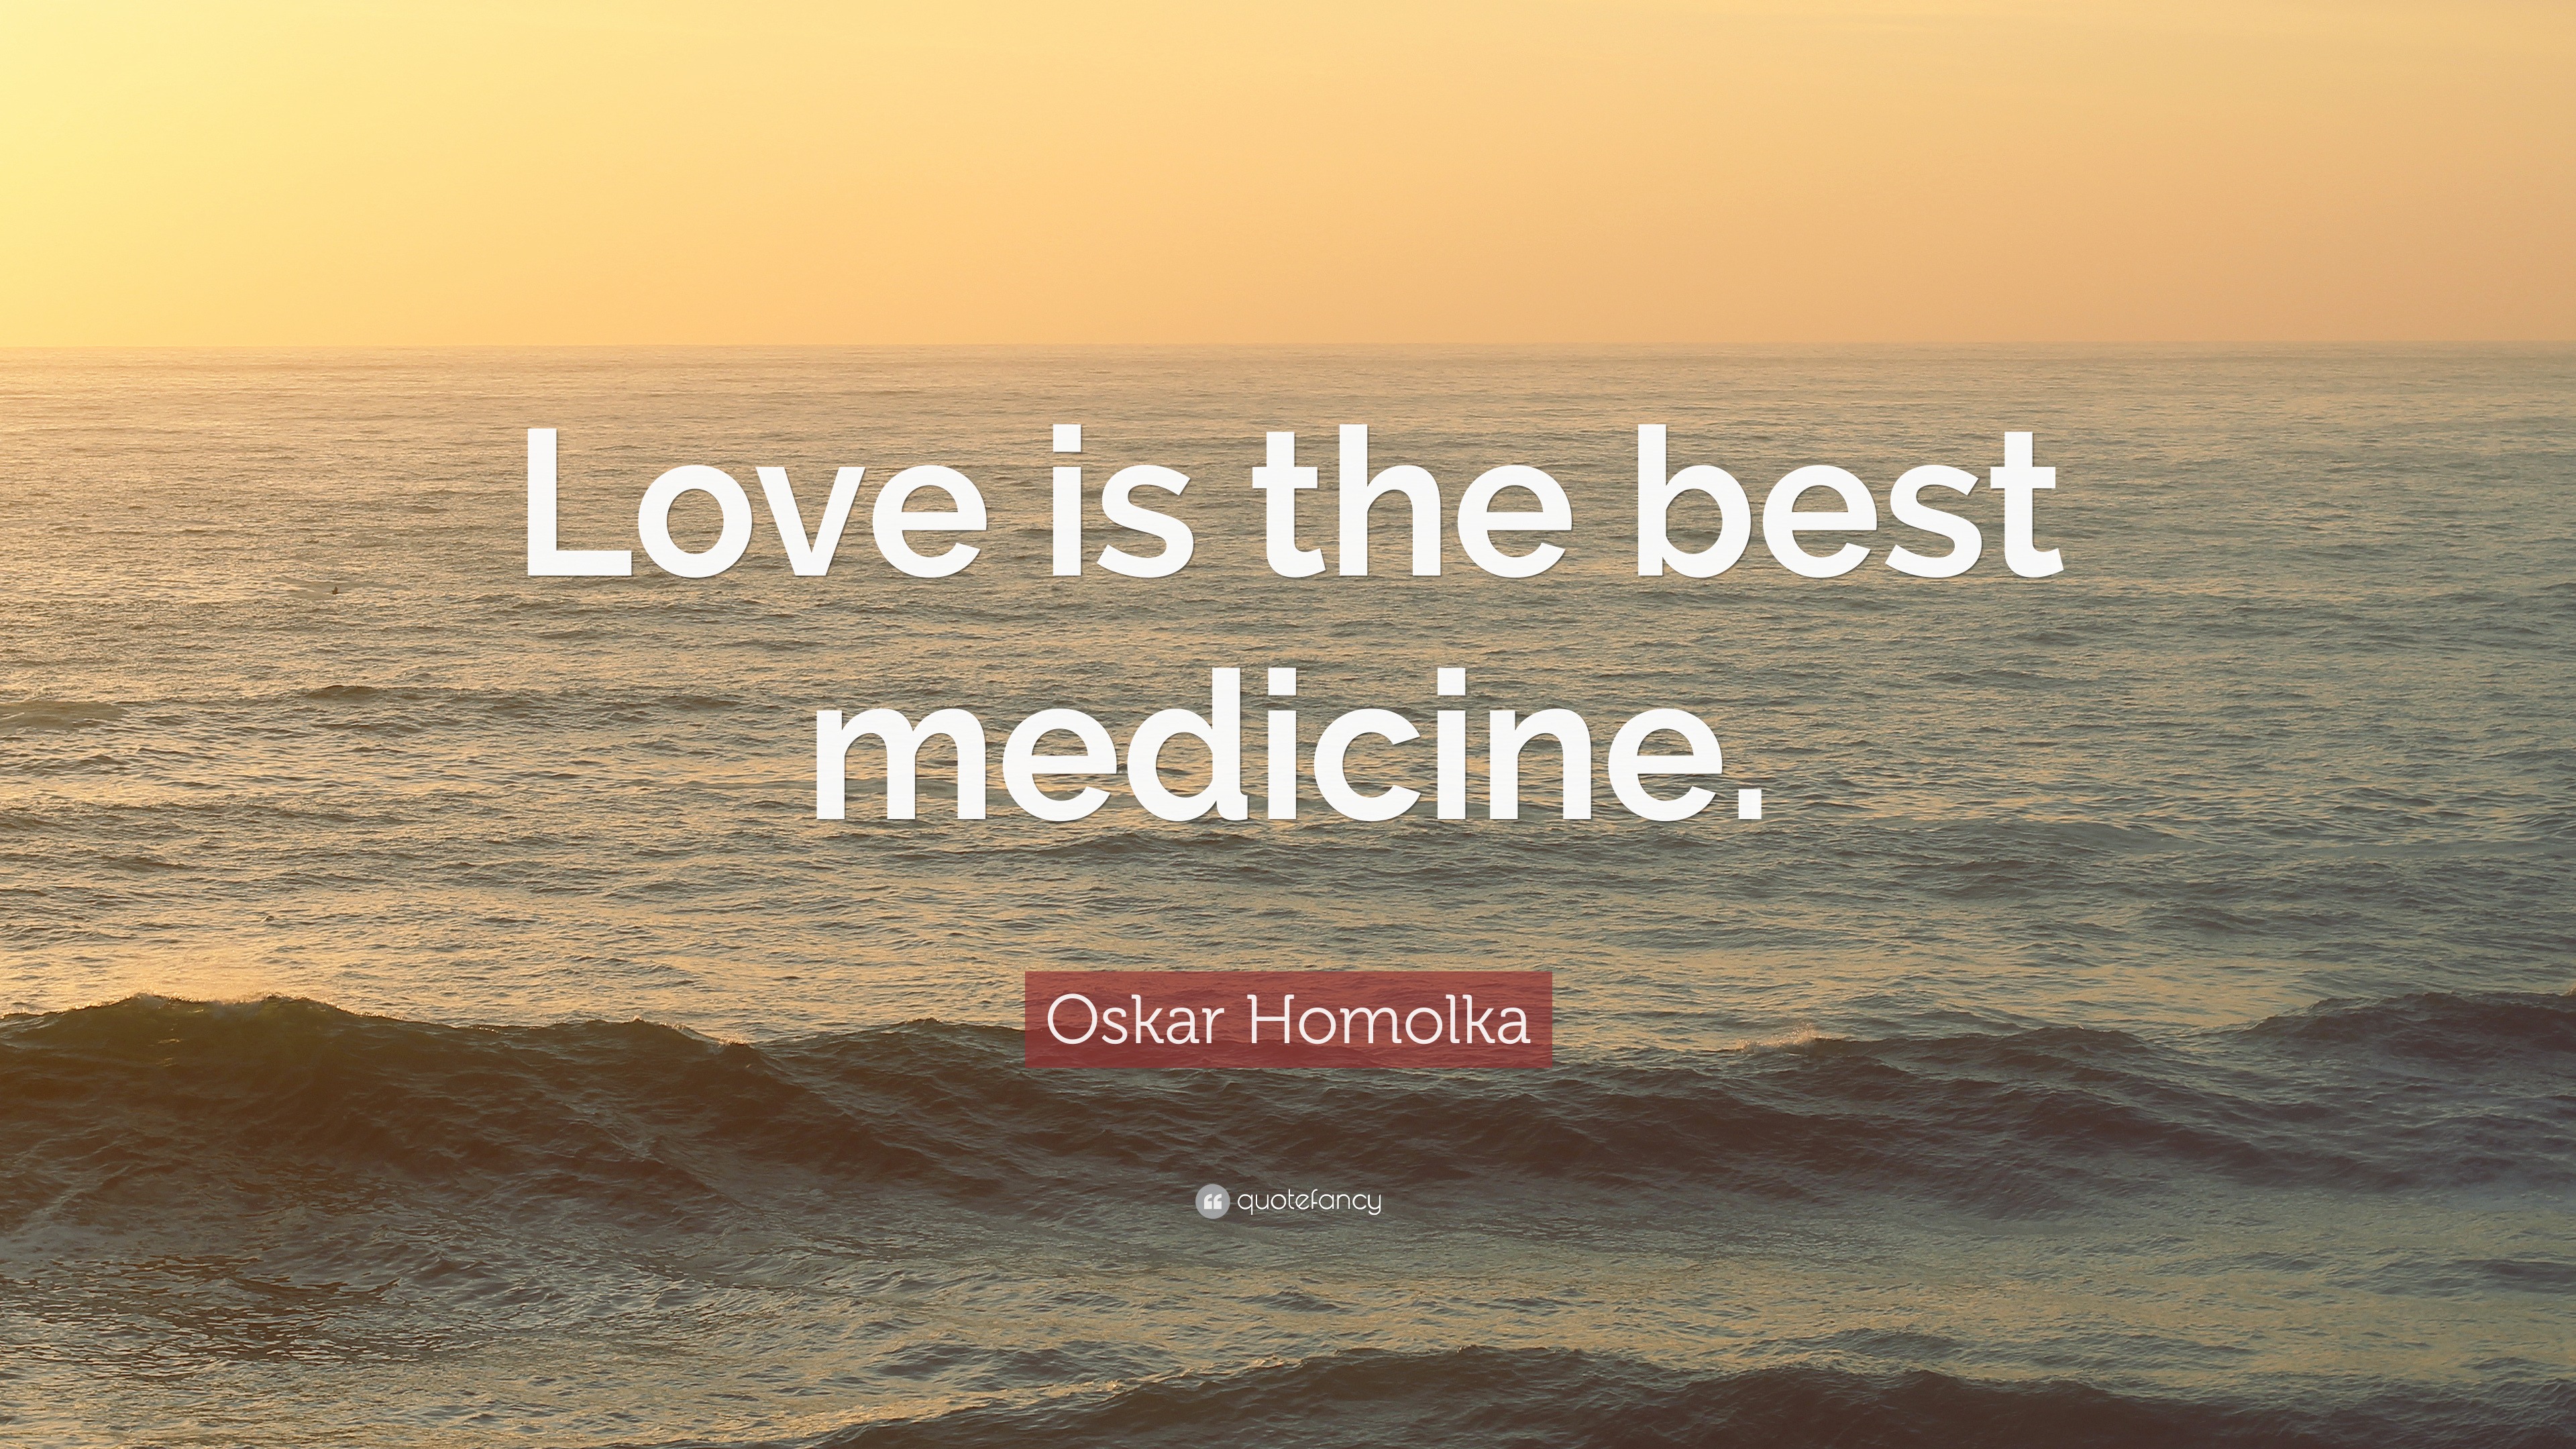 Oskar Homolka Quote “Love is the best medicine ”